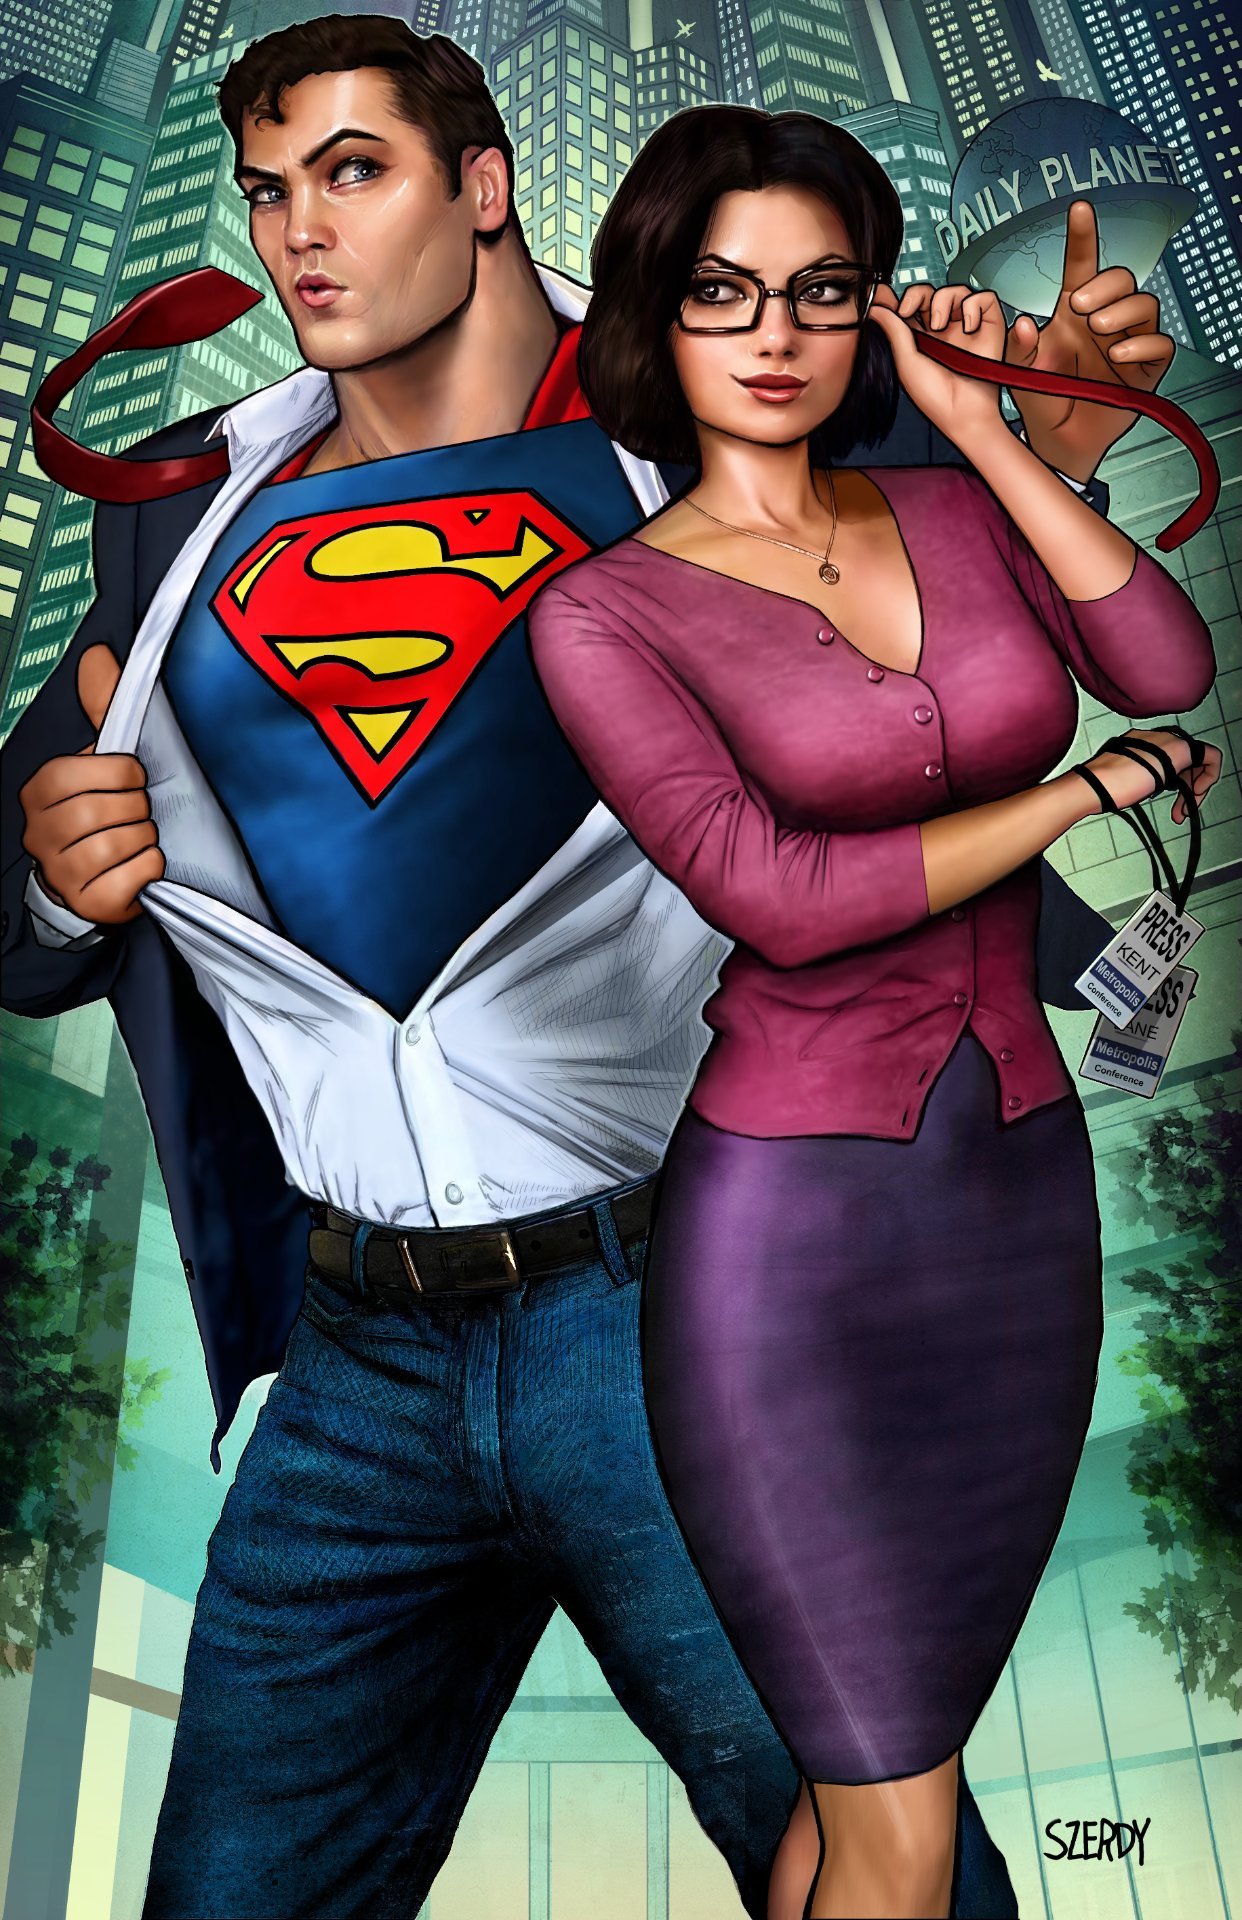 Variant cover di Action Comics #1047 di Nathan Szerdy, prima parte del crossover con Superman: Son of Kal-El